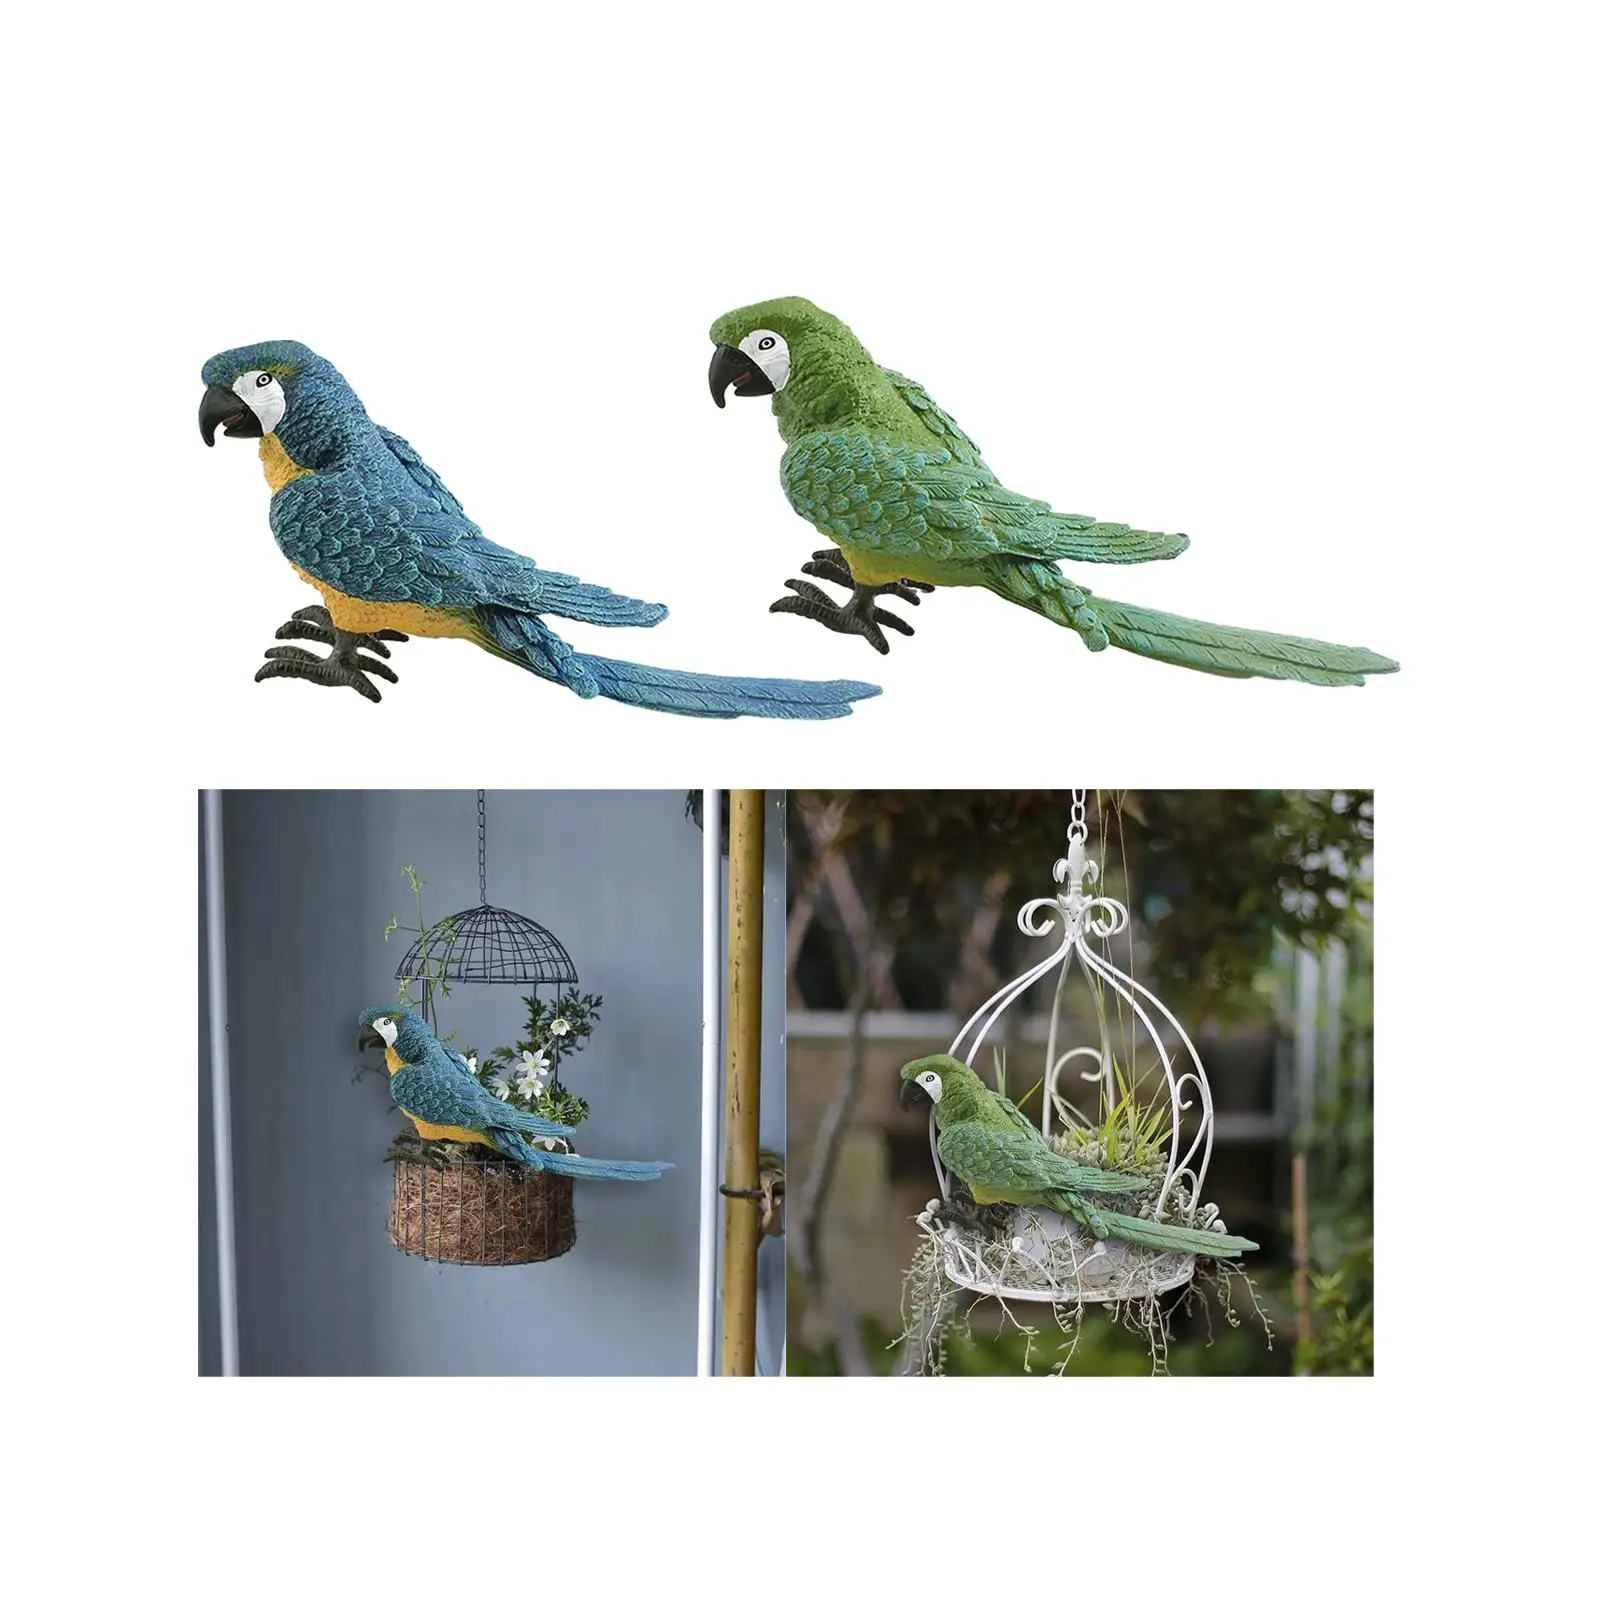 Artificial Parrot Model Cute Crafts Small Parrot Figurine Lifelike Artificial Parrot for Outdoor Garden Backyard Home Decoration